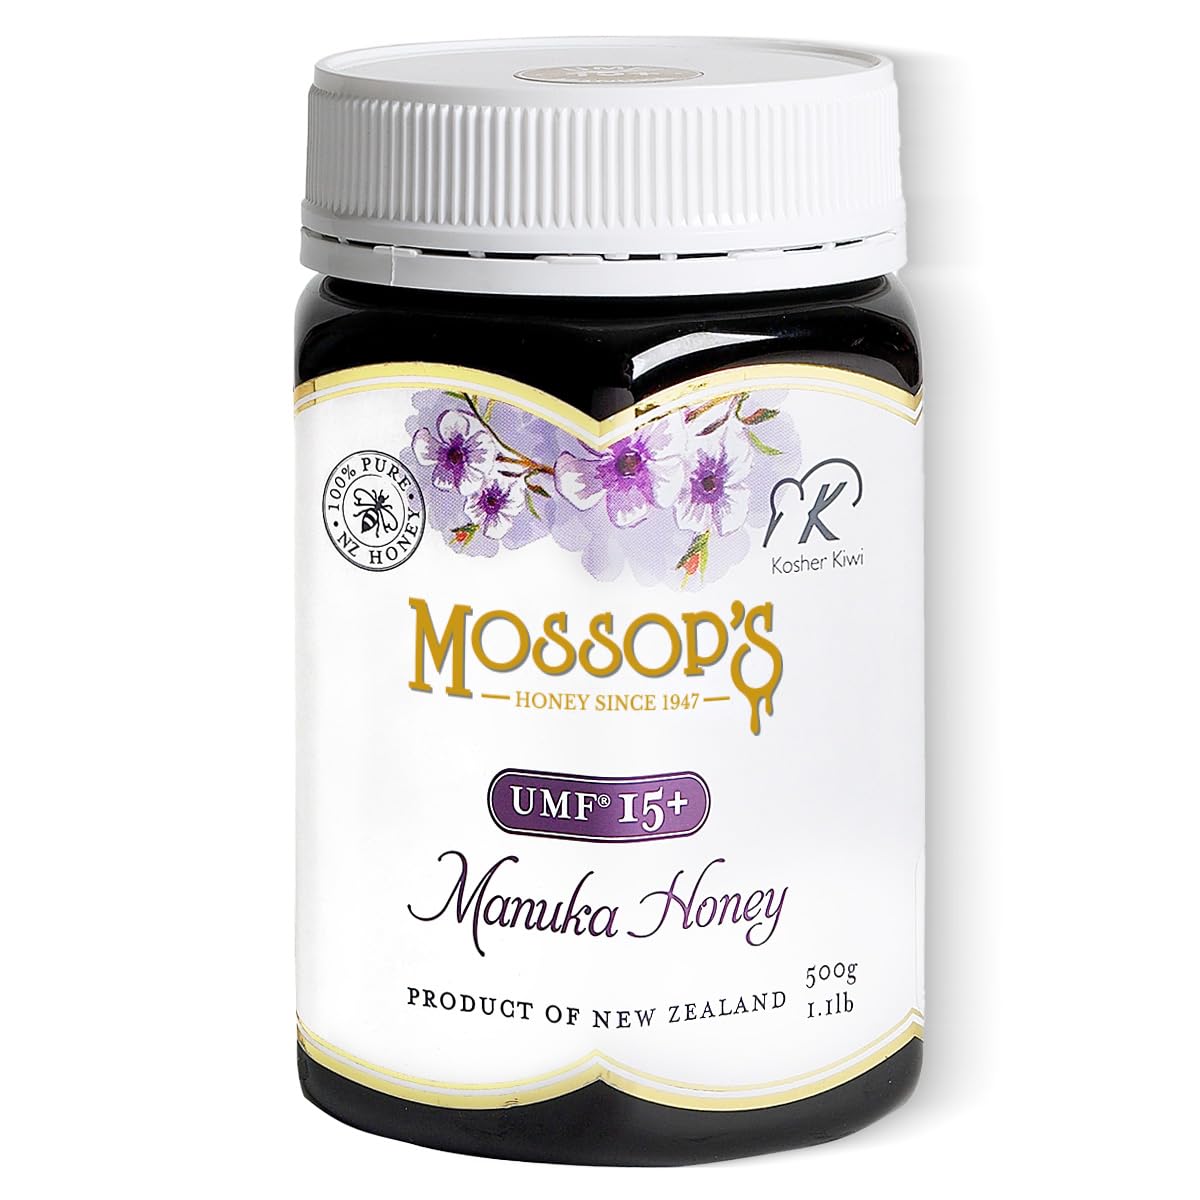 Why Should I Care About Monofloral Manuka Honey? - PURITI